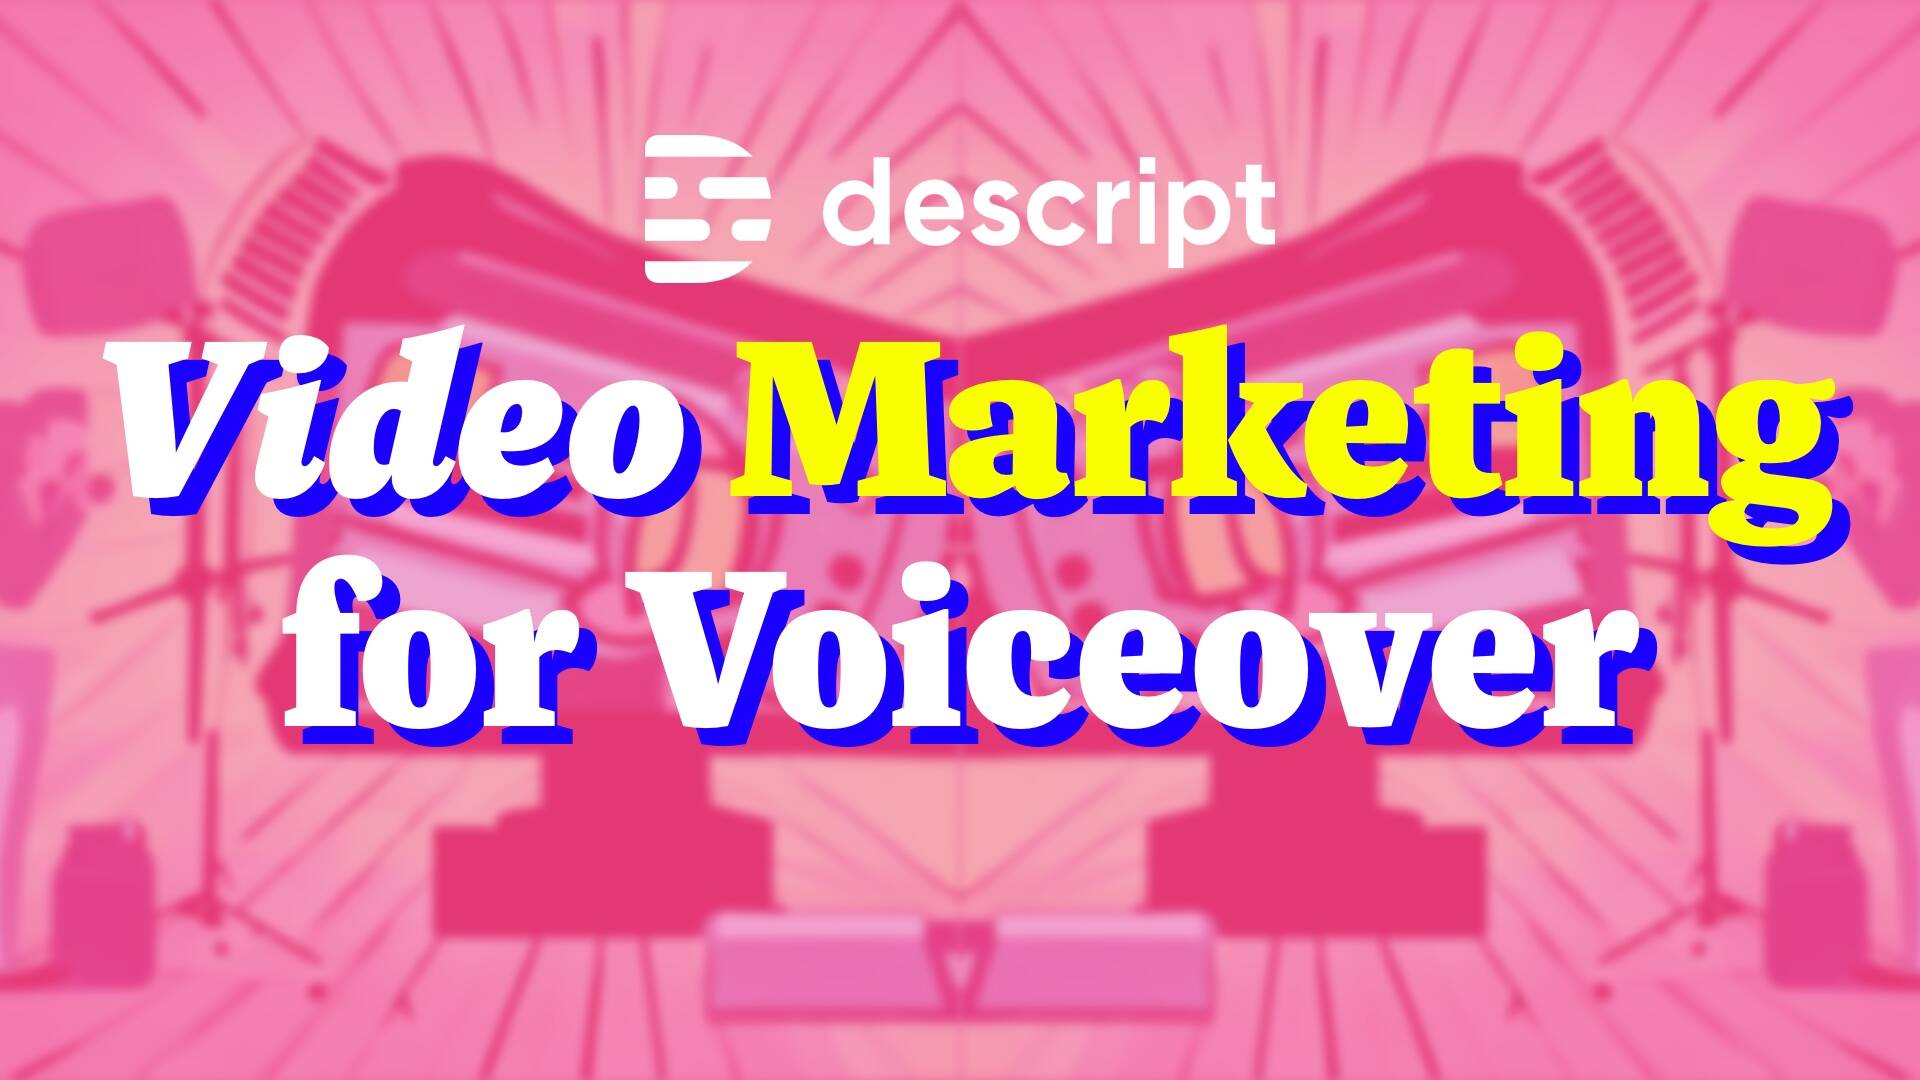 202212141411 daily ad 37 EN- Video Marketing as a Voiceover Artist using Descript’s Storyboard.jpg